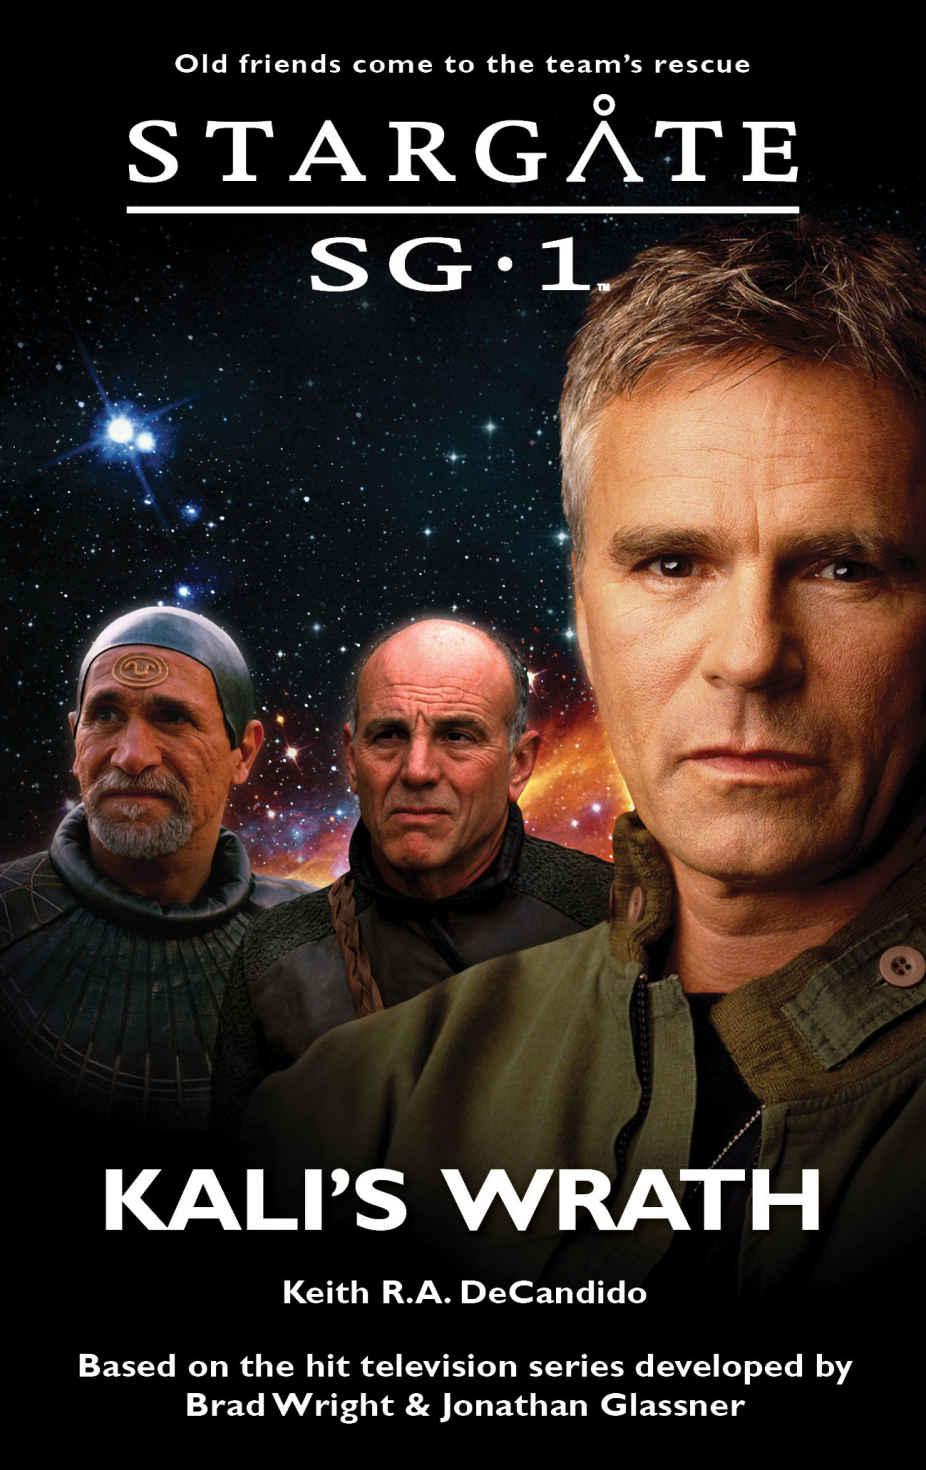 STARGATE SG-1: Kali's Wrath (SG1-28) (2016) by Keith R.A. DeCandido